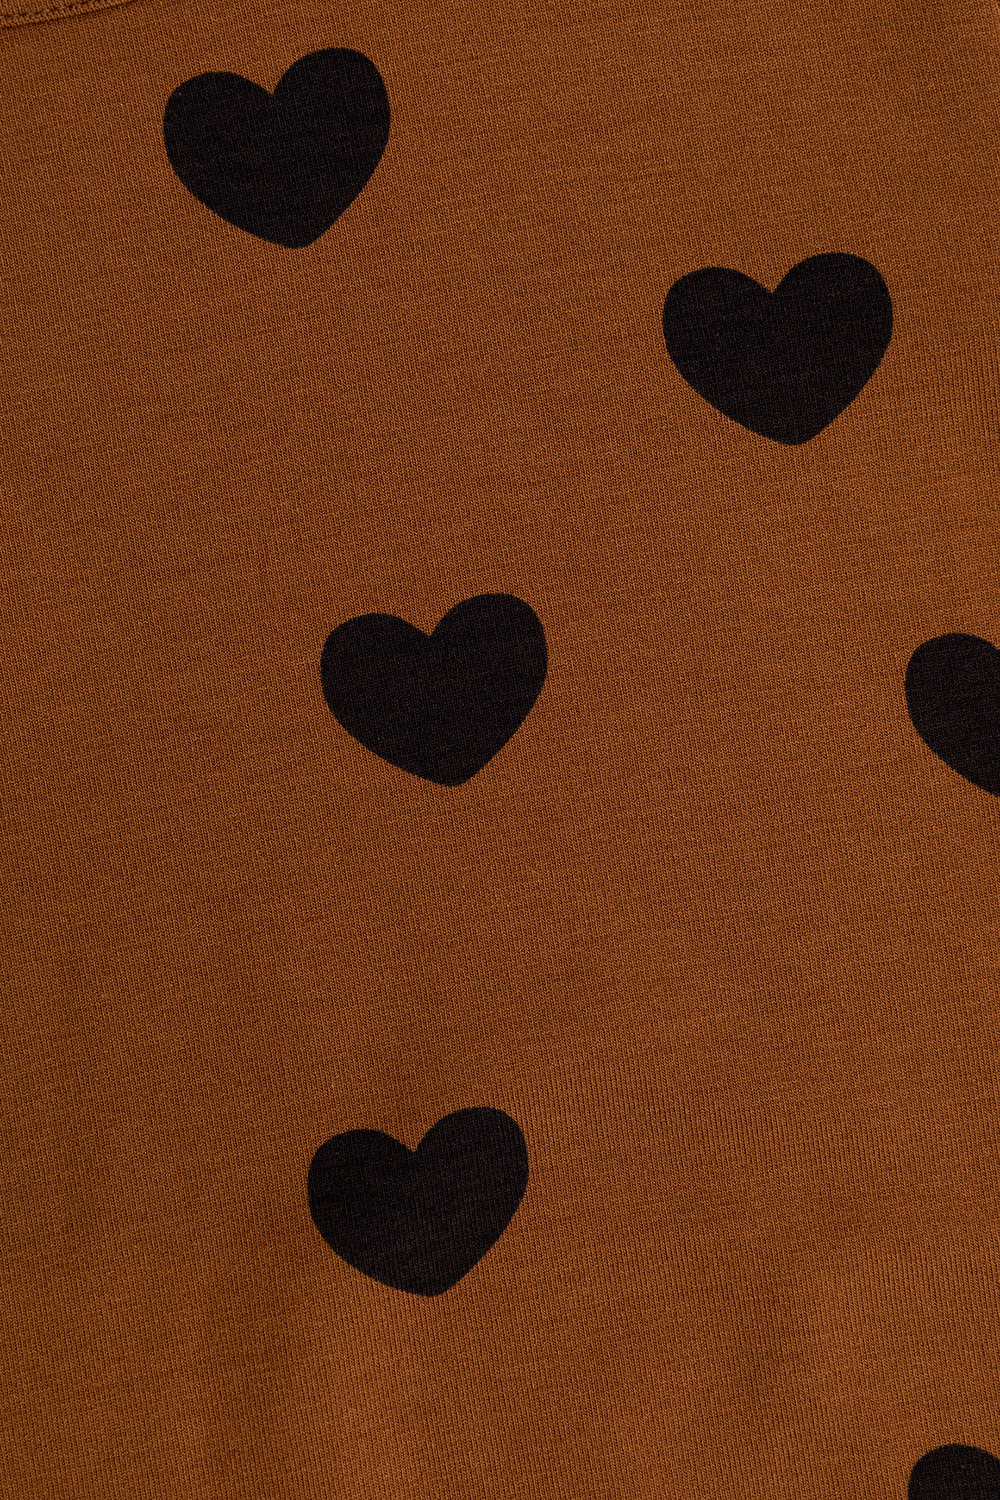 Mini Rodini T-shirt with hearts print